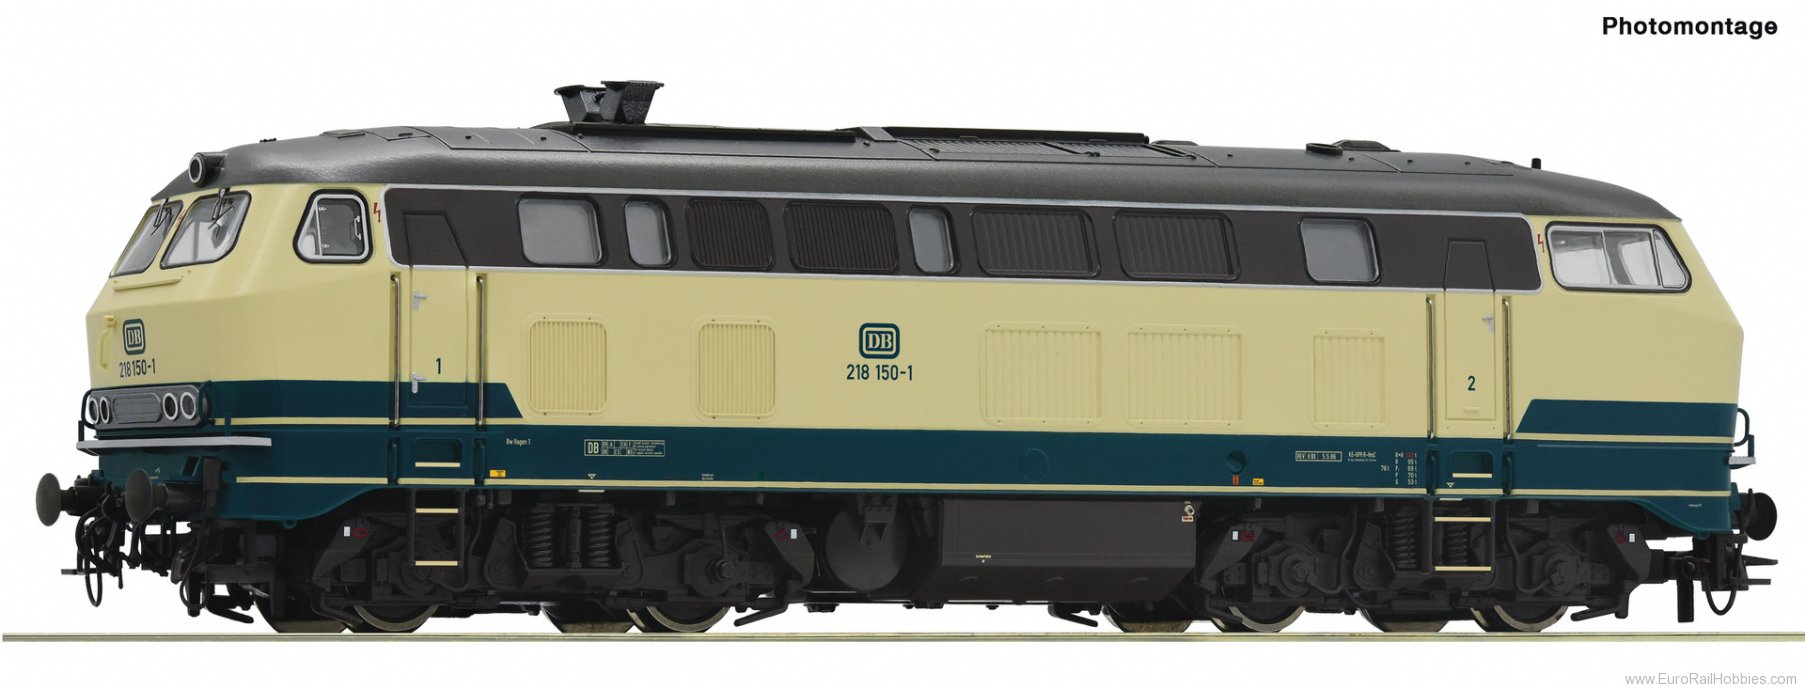 Roco 7300010 Diesel locomotive 218 150-1, DB (DC Analog)